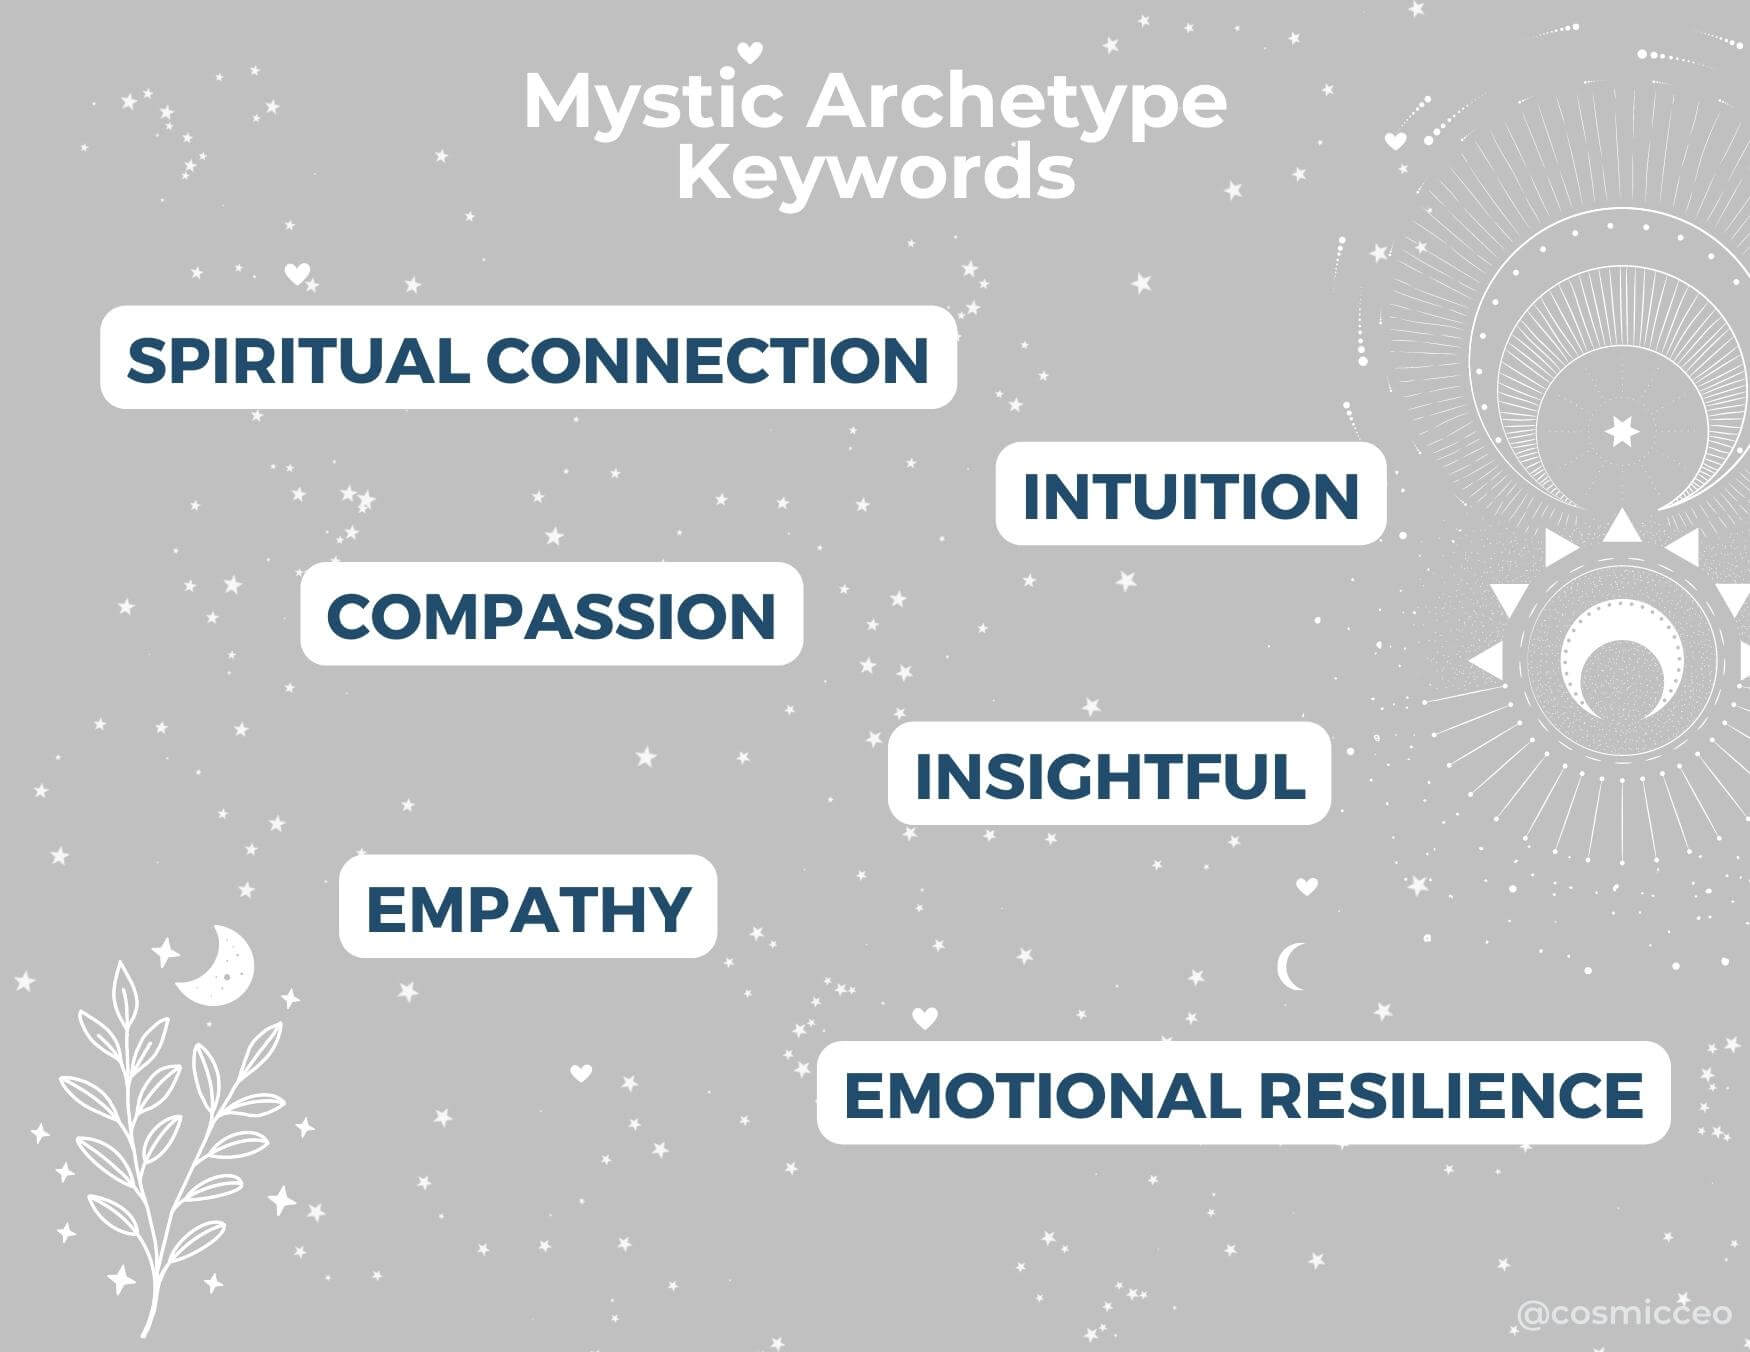 Cosmic CEO Archetypes | Mystic Keywords